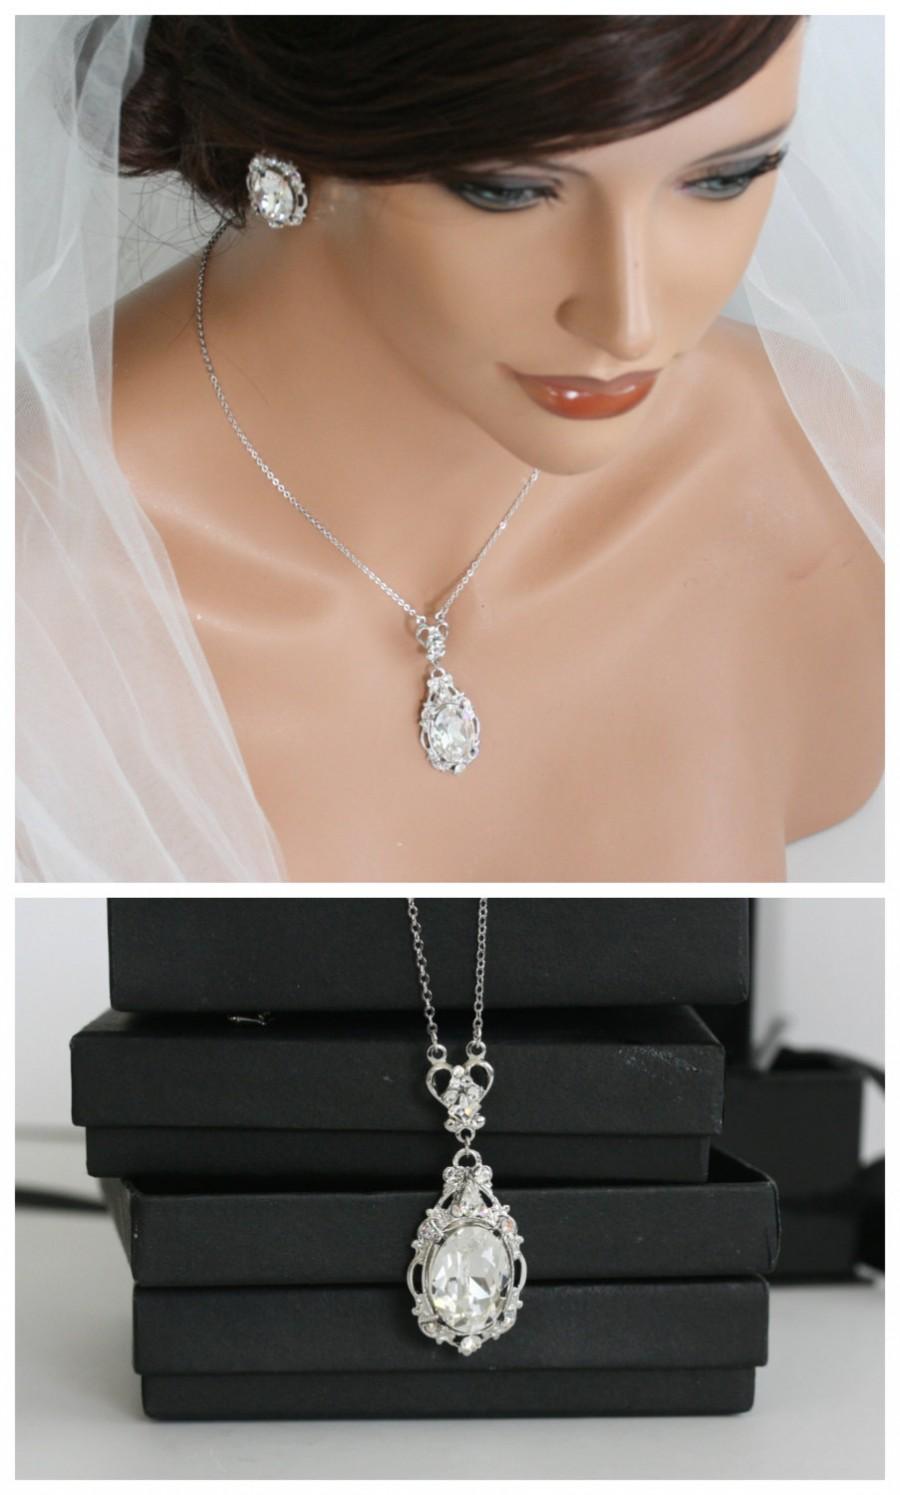 Wedding - Pendant Bridal Necklace Swarovski Crystal Simple Wedding Necklace Vintage necklace Rhinestone Wedding jewelry RYAN PENDANT